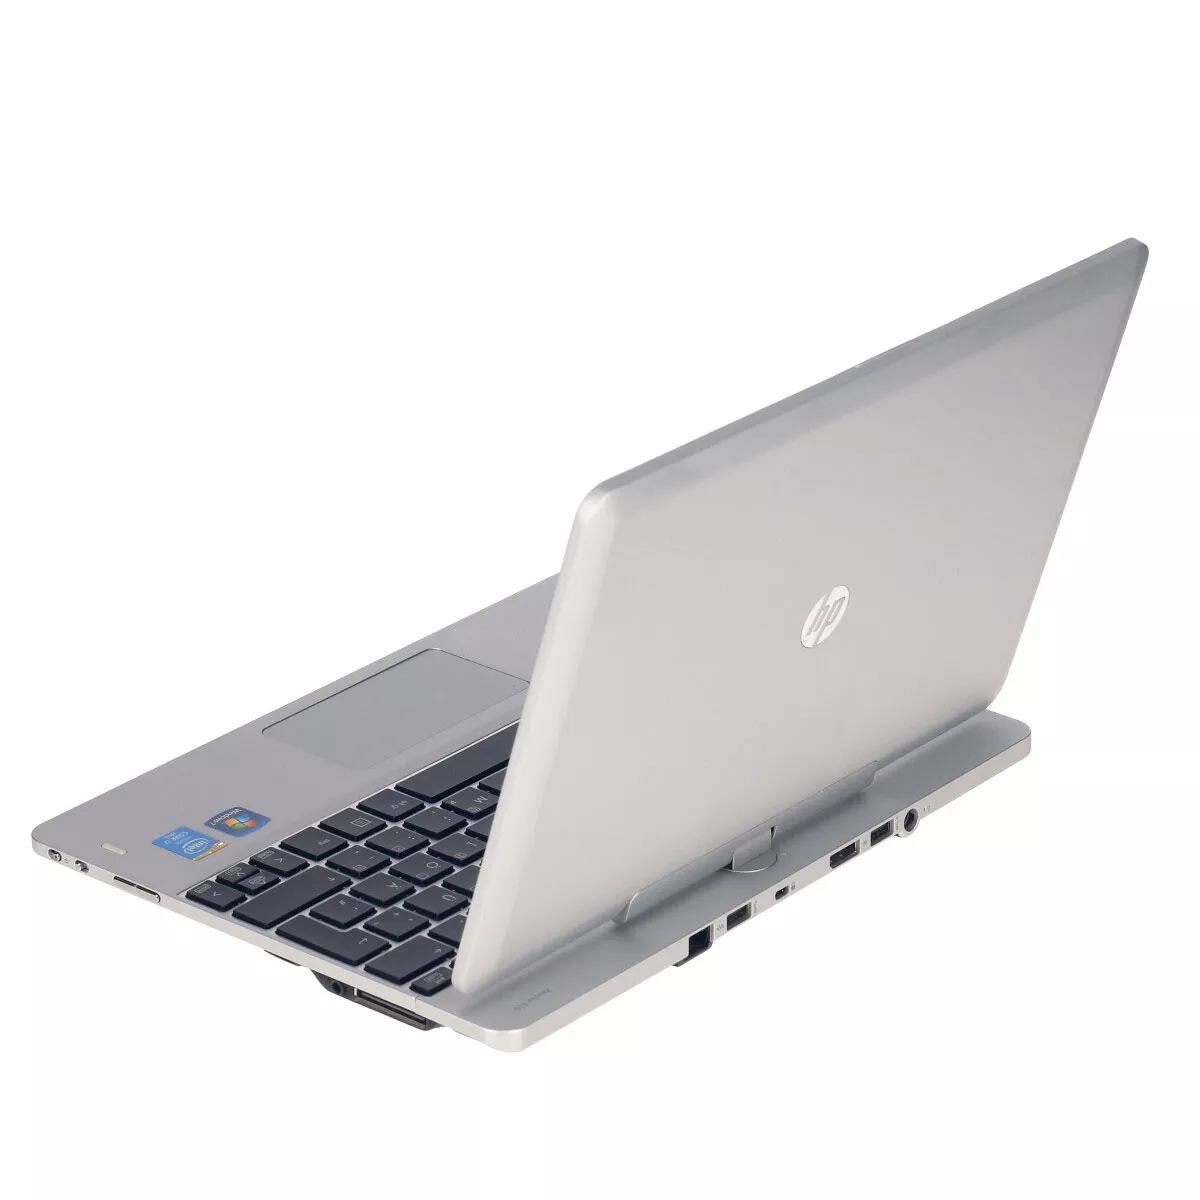 HP EliteBook Revolve 810 G3 Core i5 5300U 2,3 GHz Webcam